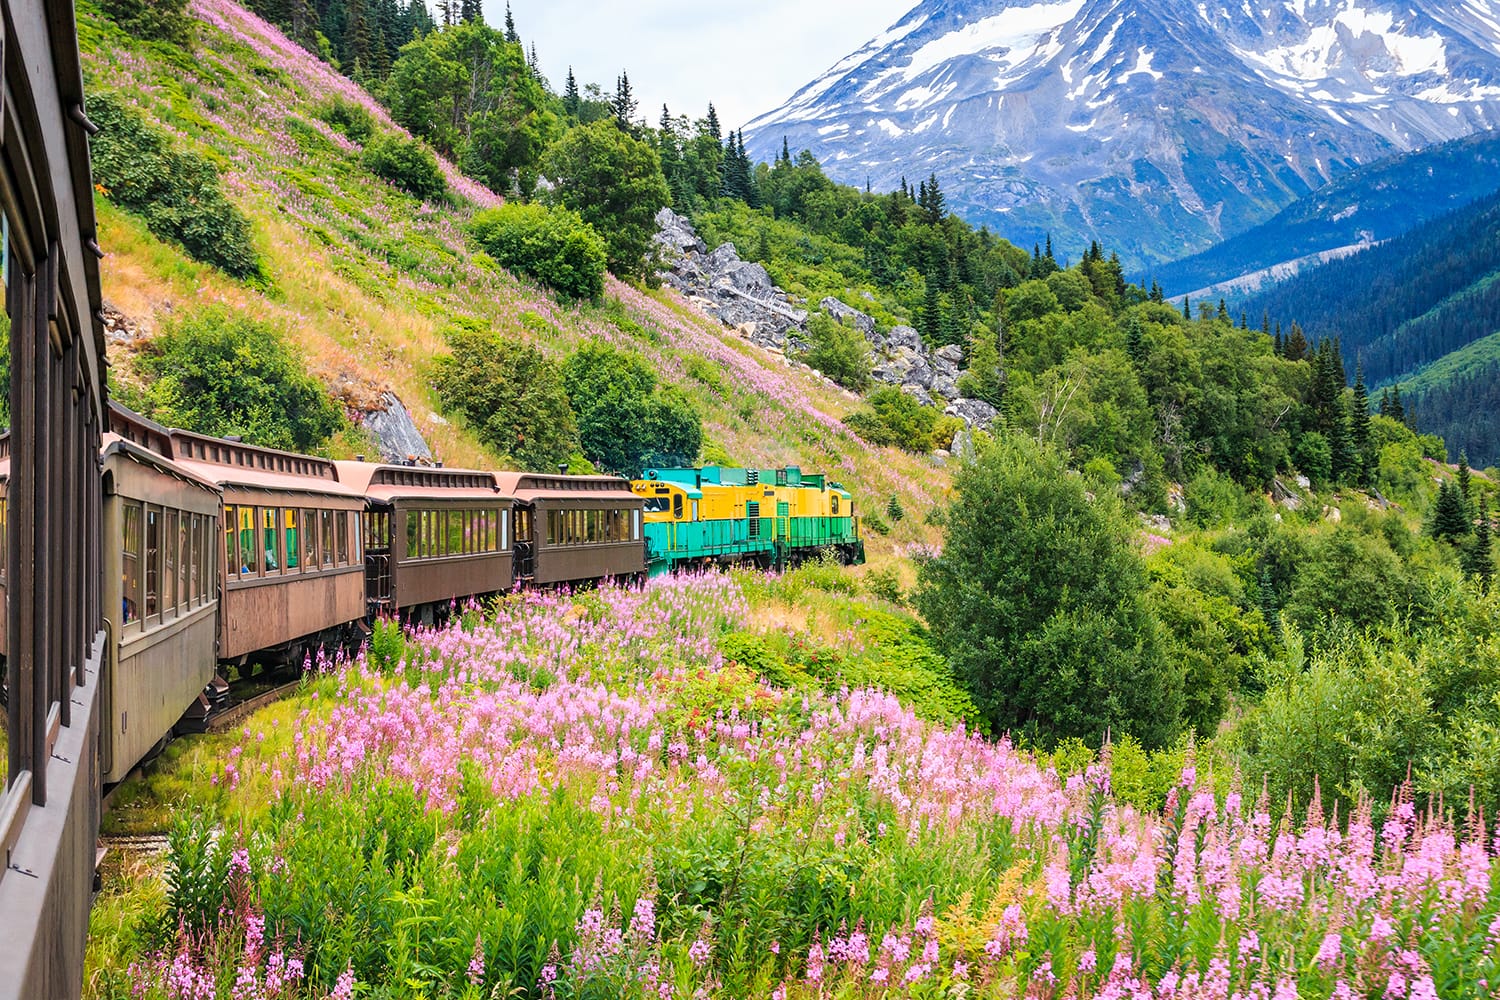 The scenic White Pass & Yukon Route Railroad in Skagway, Alaska